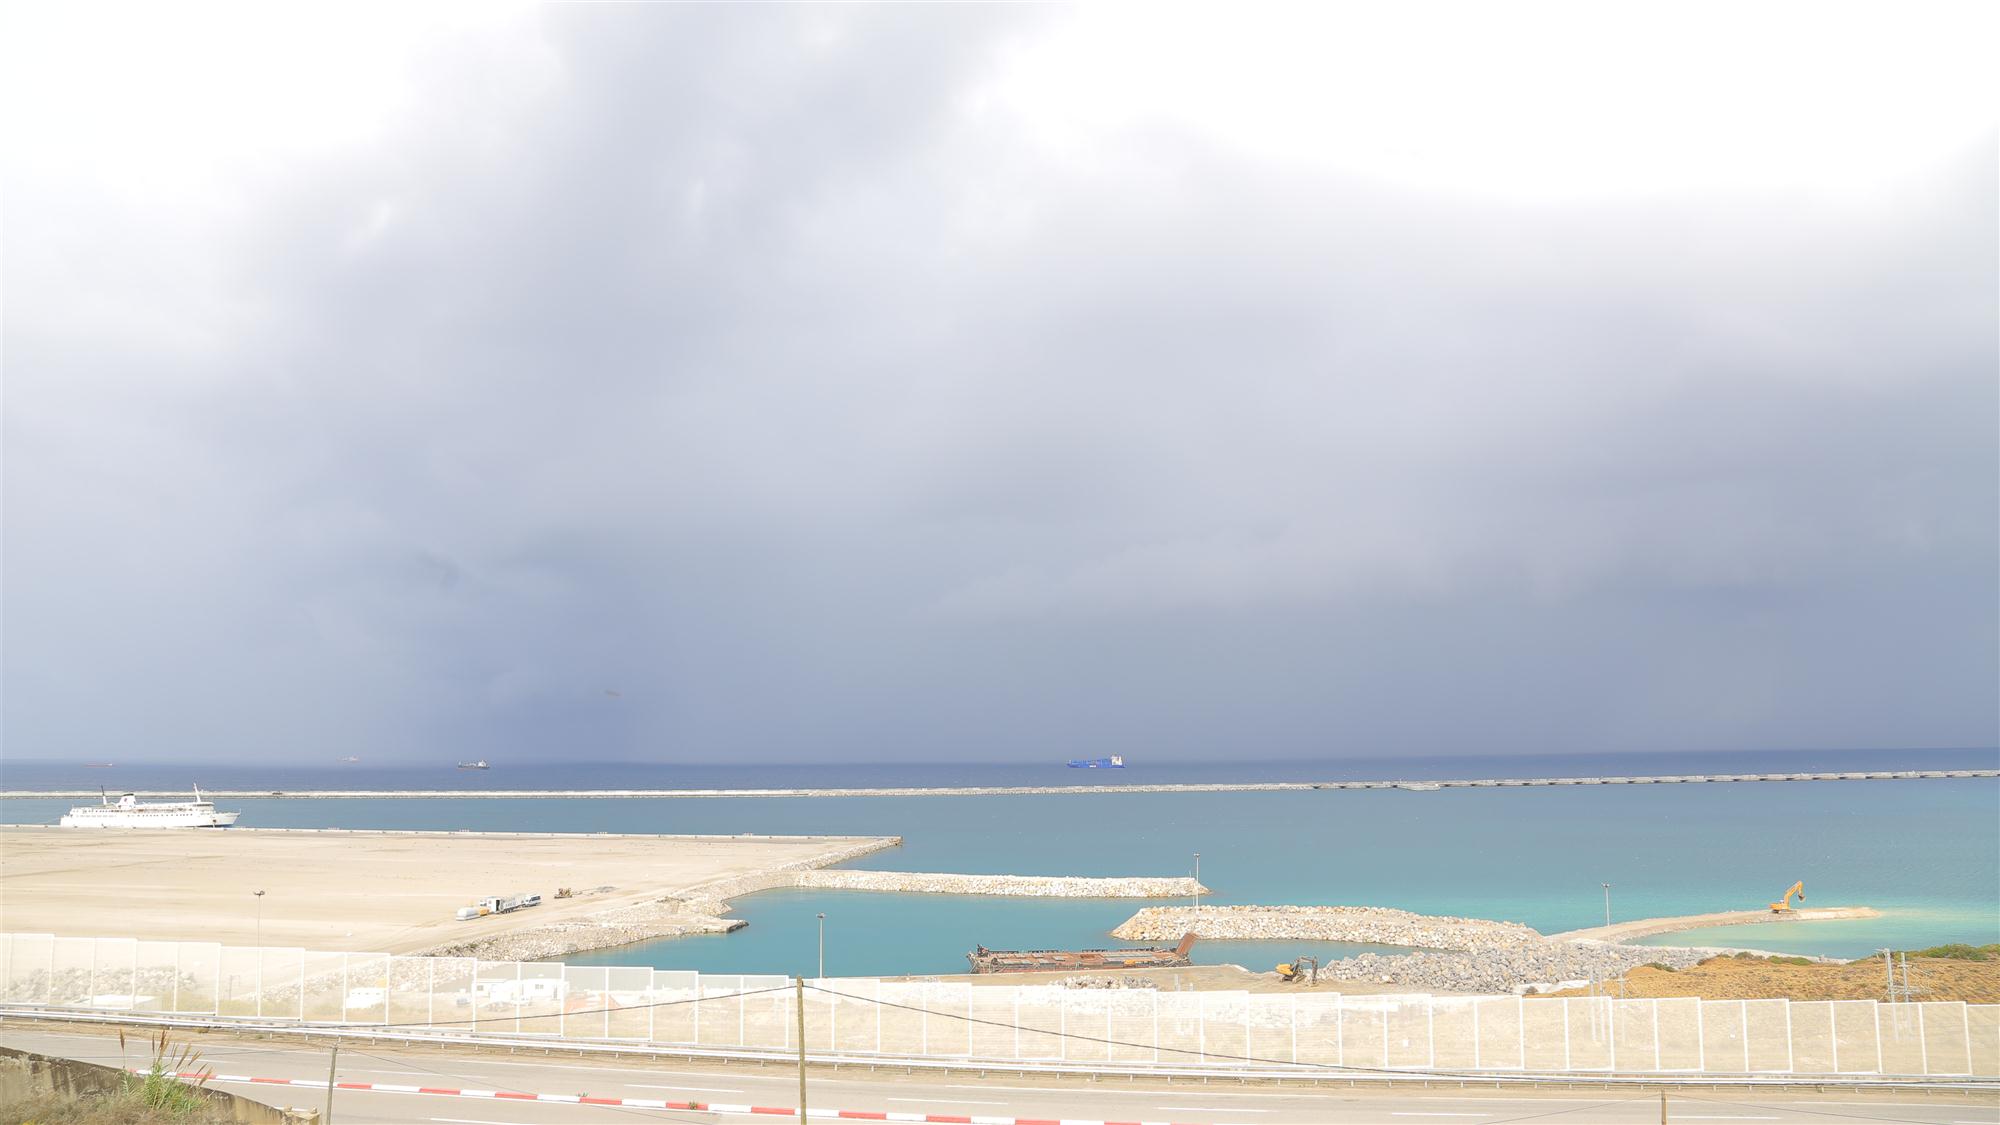 Self Photos / Files - APM MedPort Tangier [2]